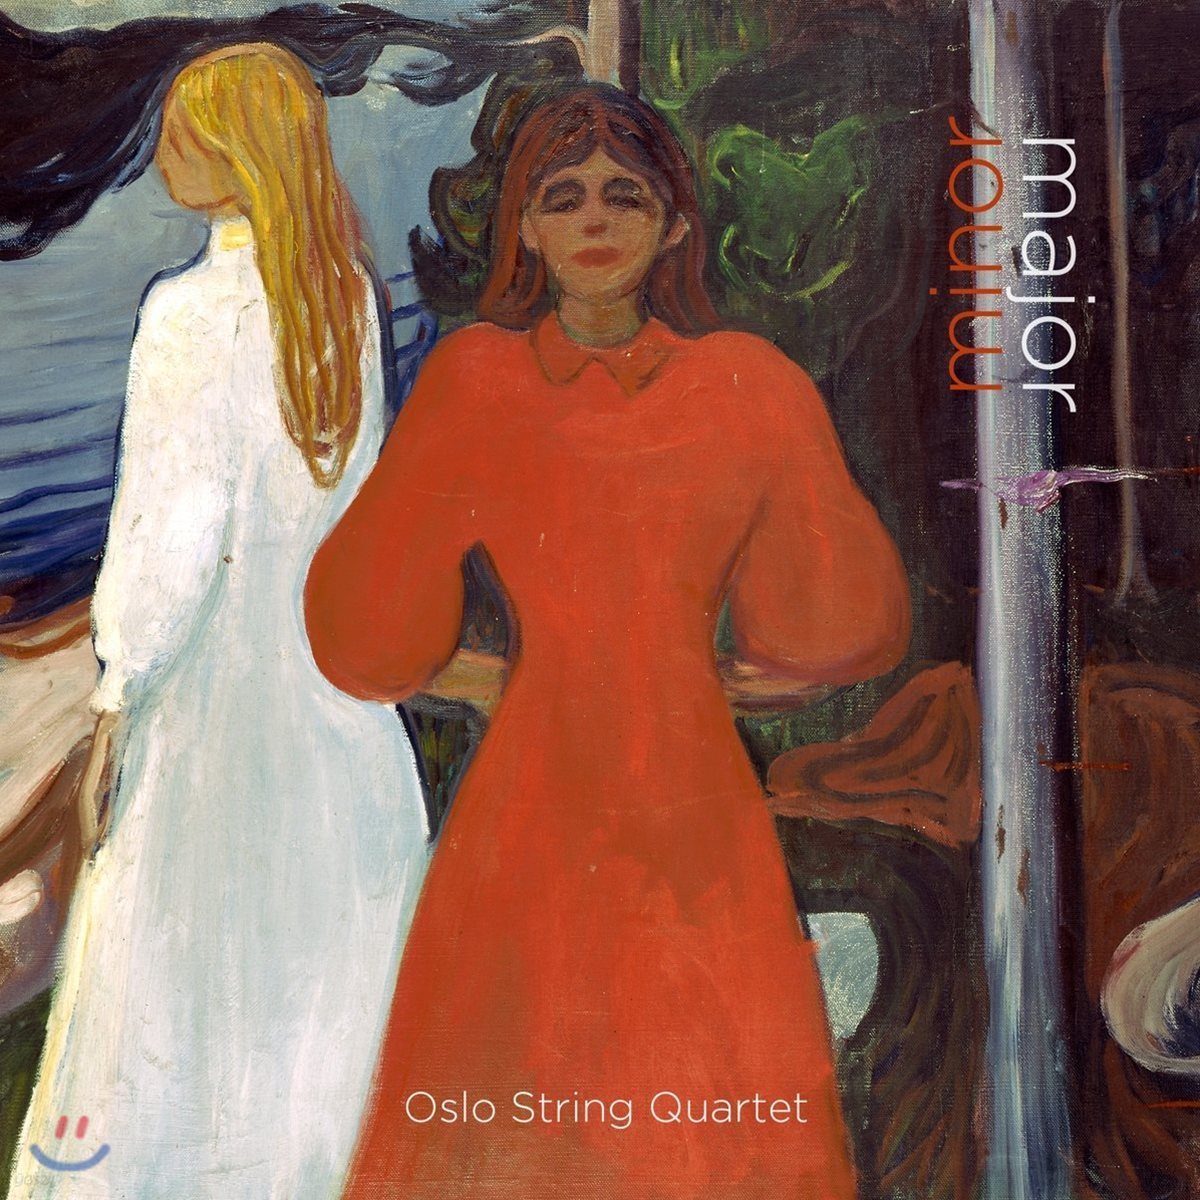 Oslo String Quartet 마이너 메이저 - 베토벤: 현악 사중주 11번 / 슈베르트: 사중주 15번 (Minor Major - Beethoven / Schubert: String Quartets) 오슬로 스트링 콰르텟